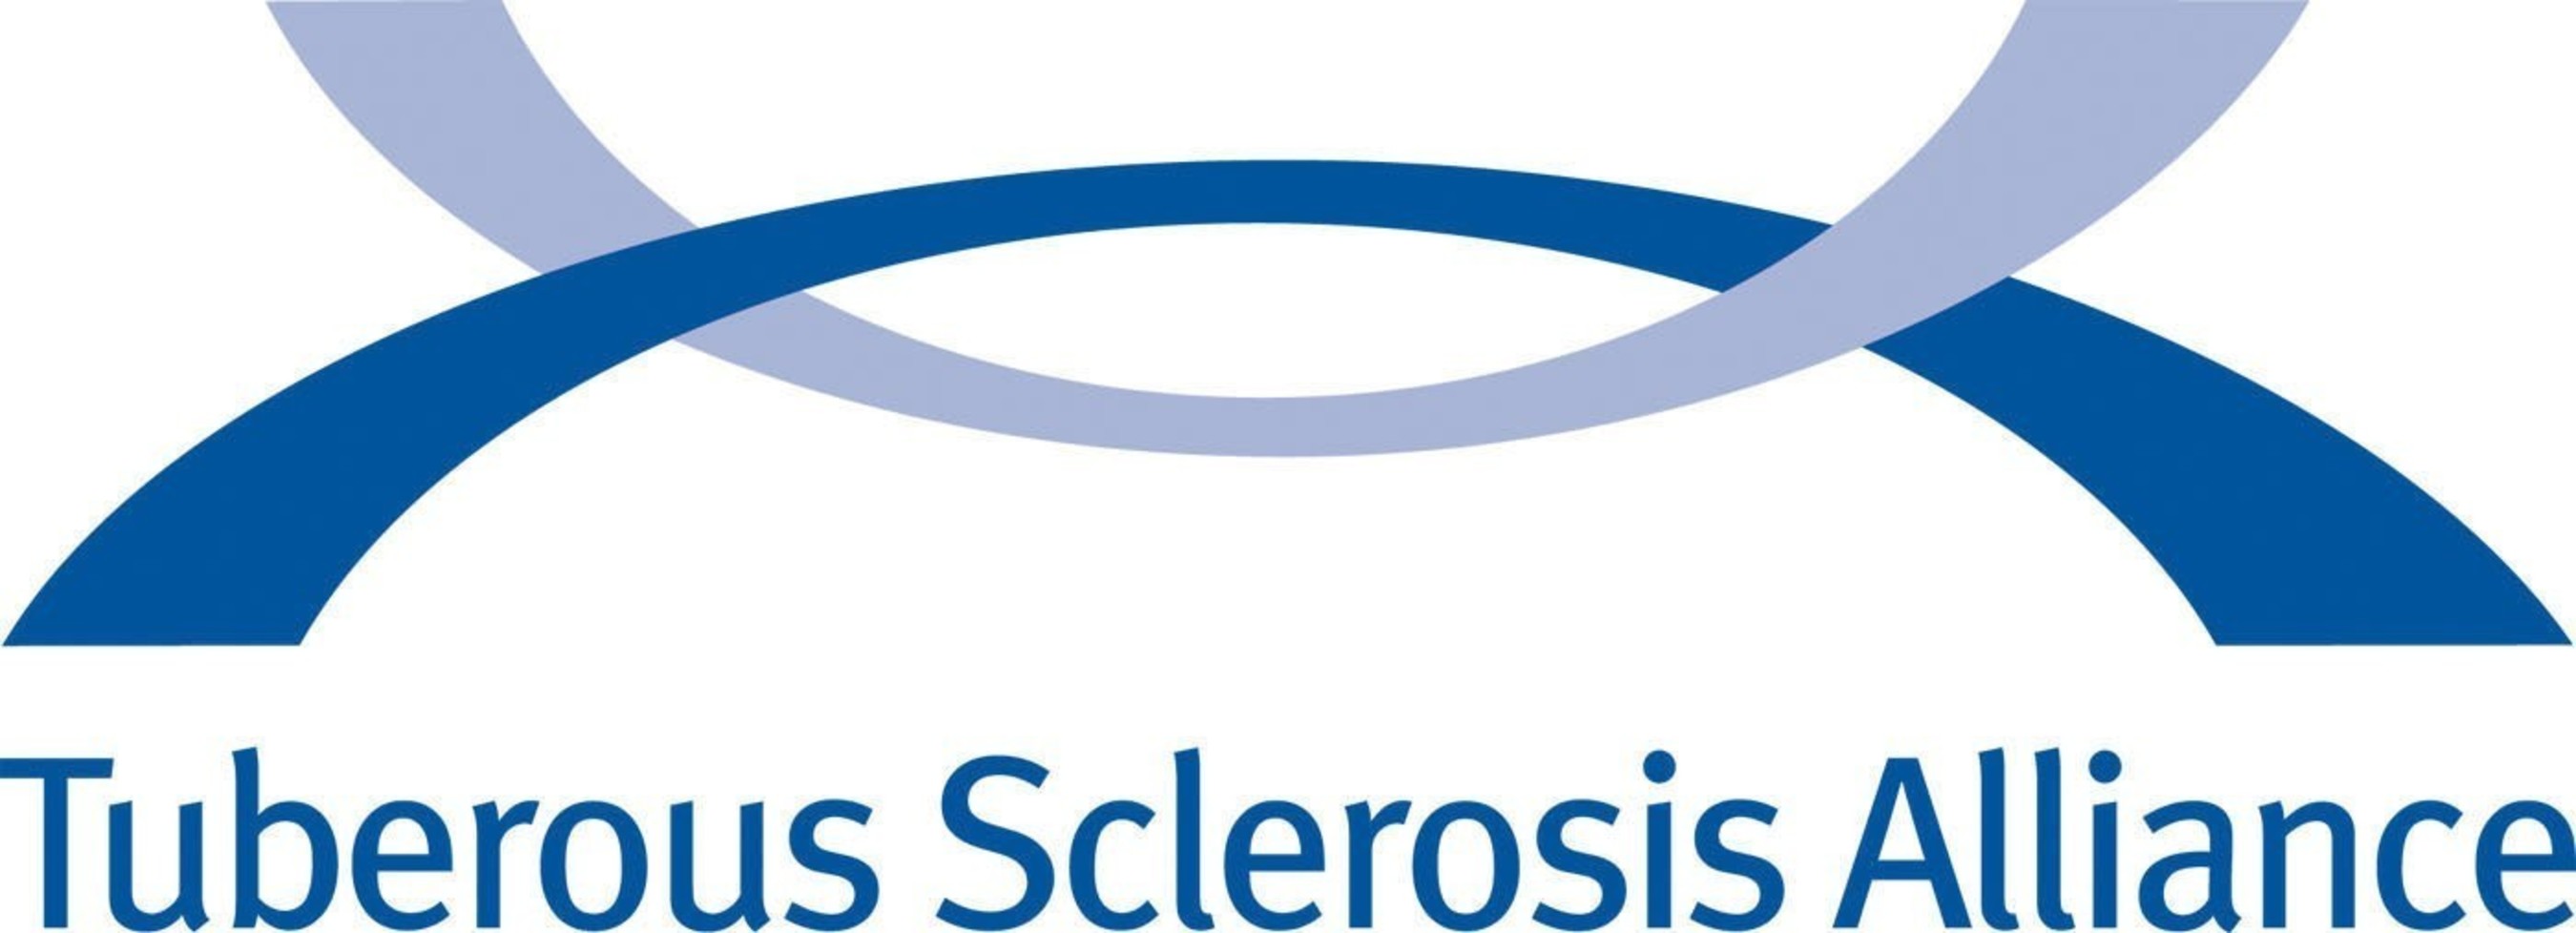 TS Alliance Logo. (PRNewsFoto/Tuberous Sclerosis Alliance)